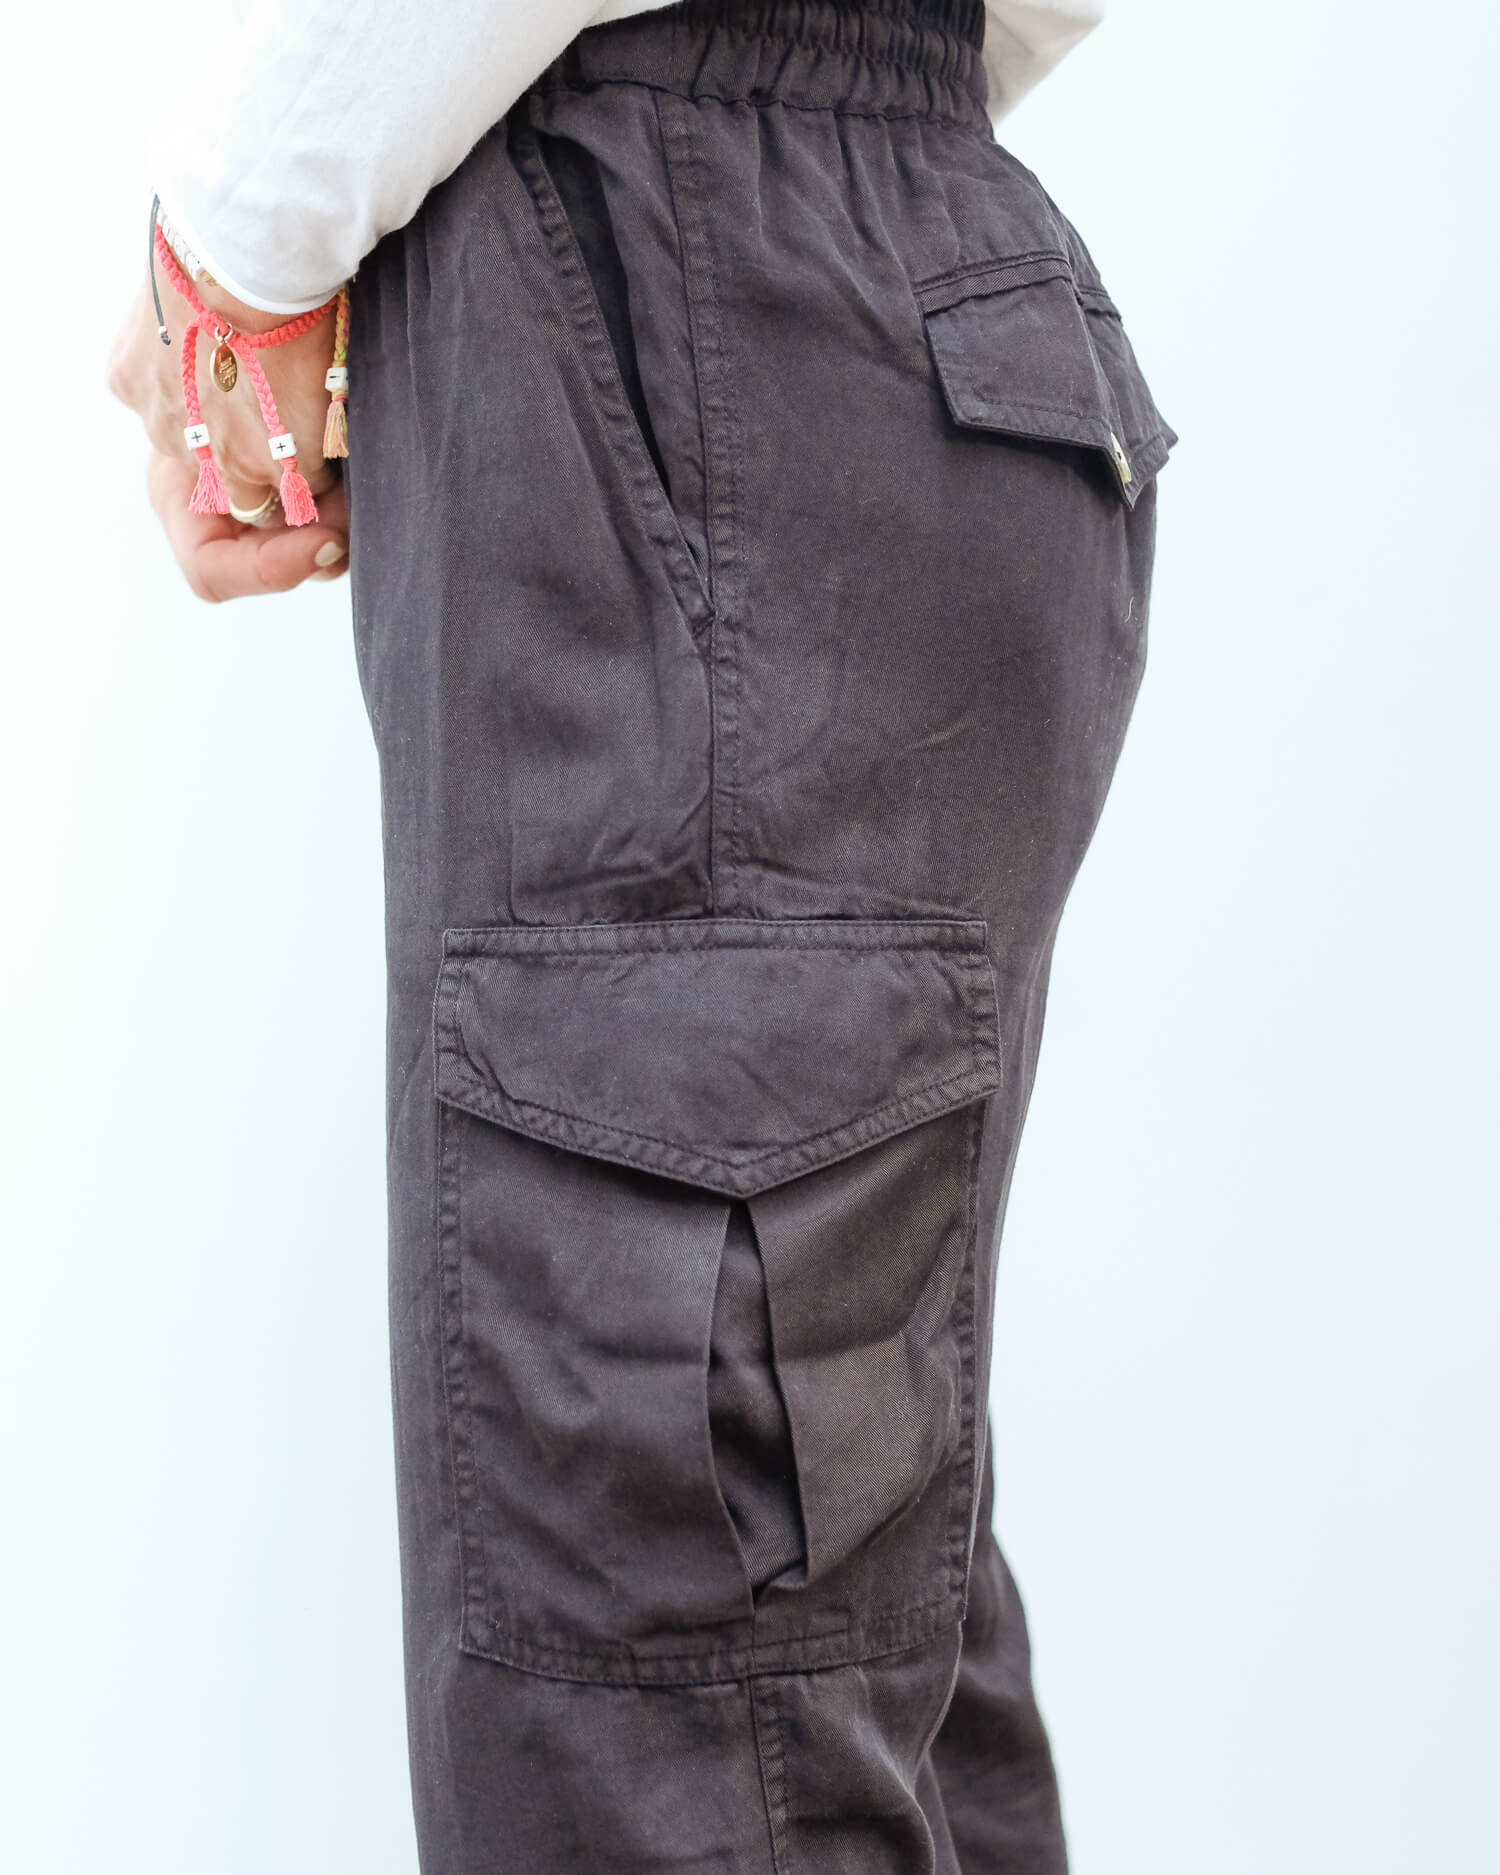 L&H Parker trousers in carbon